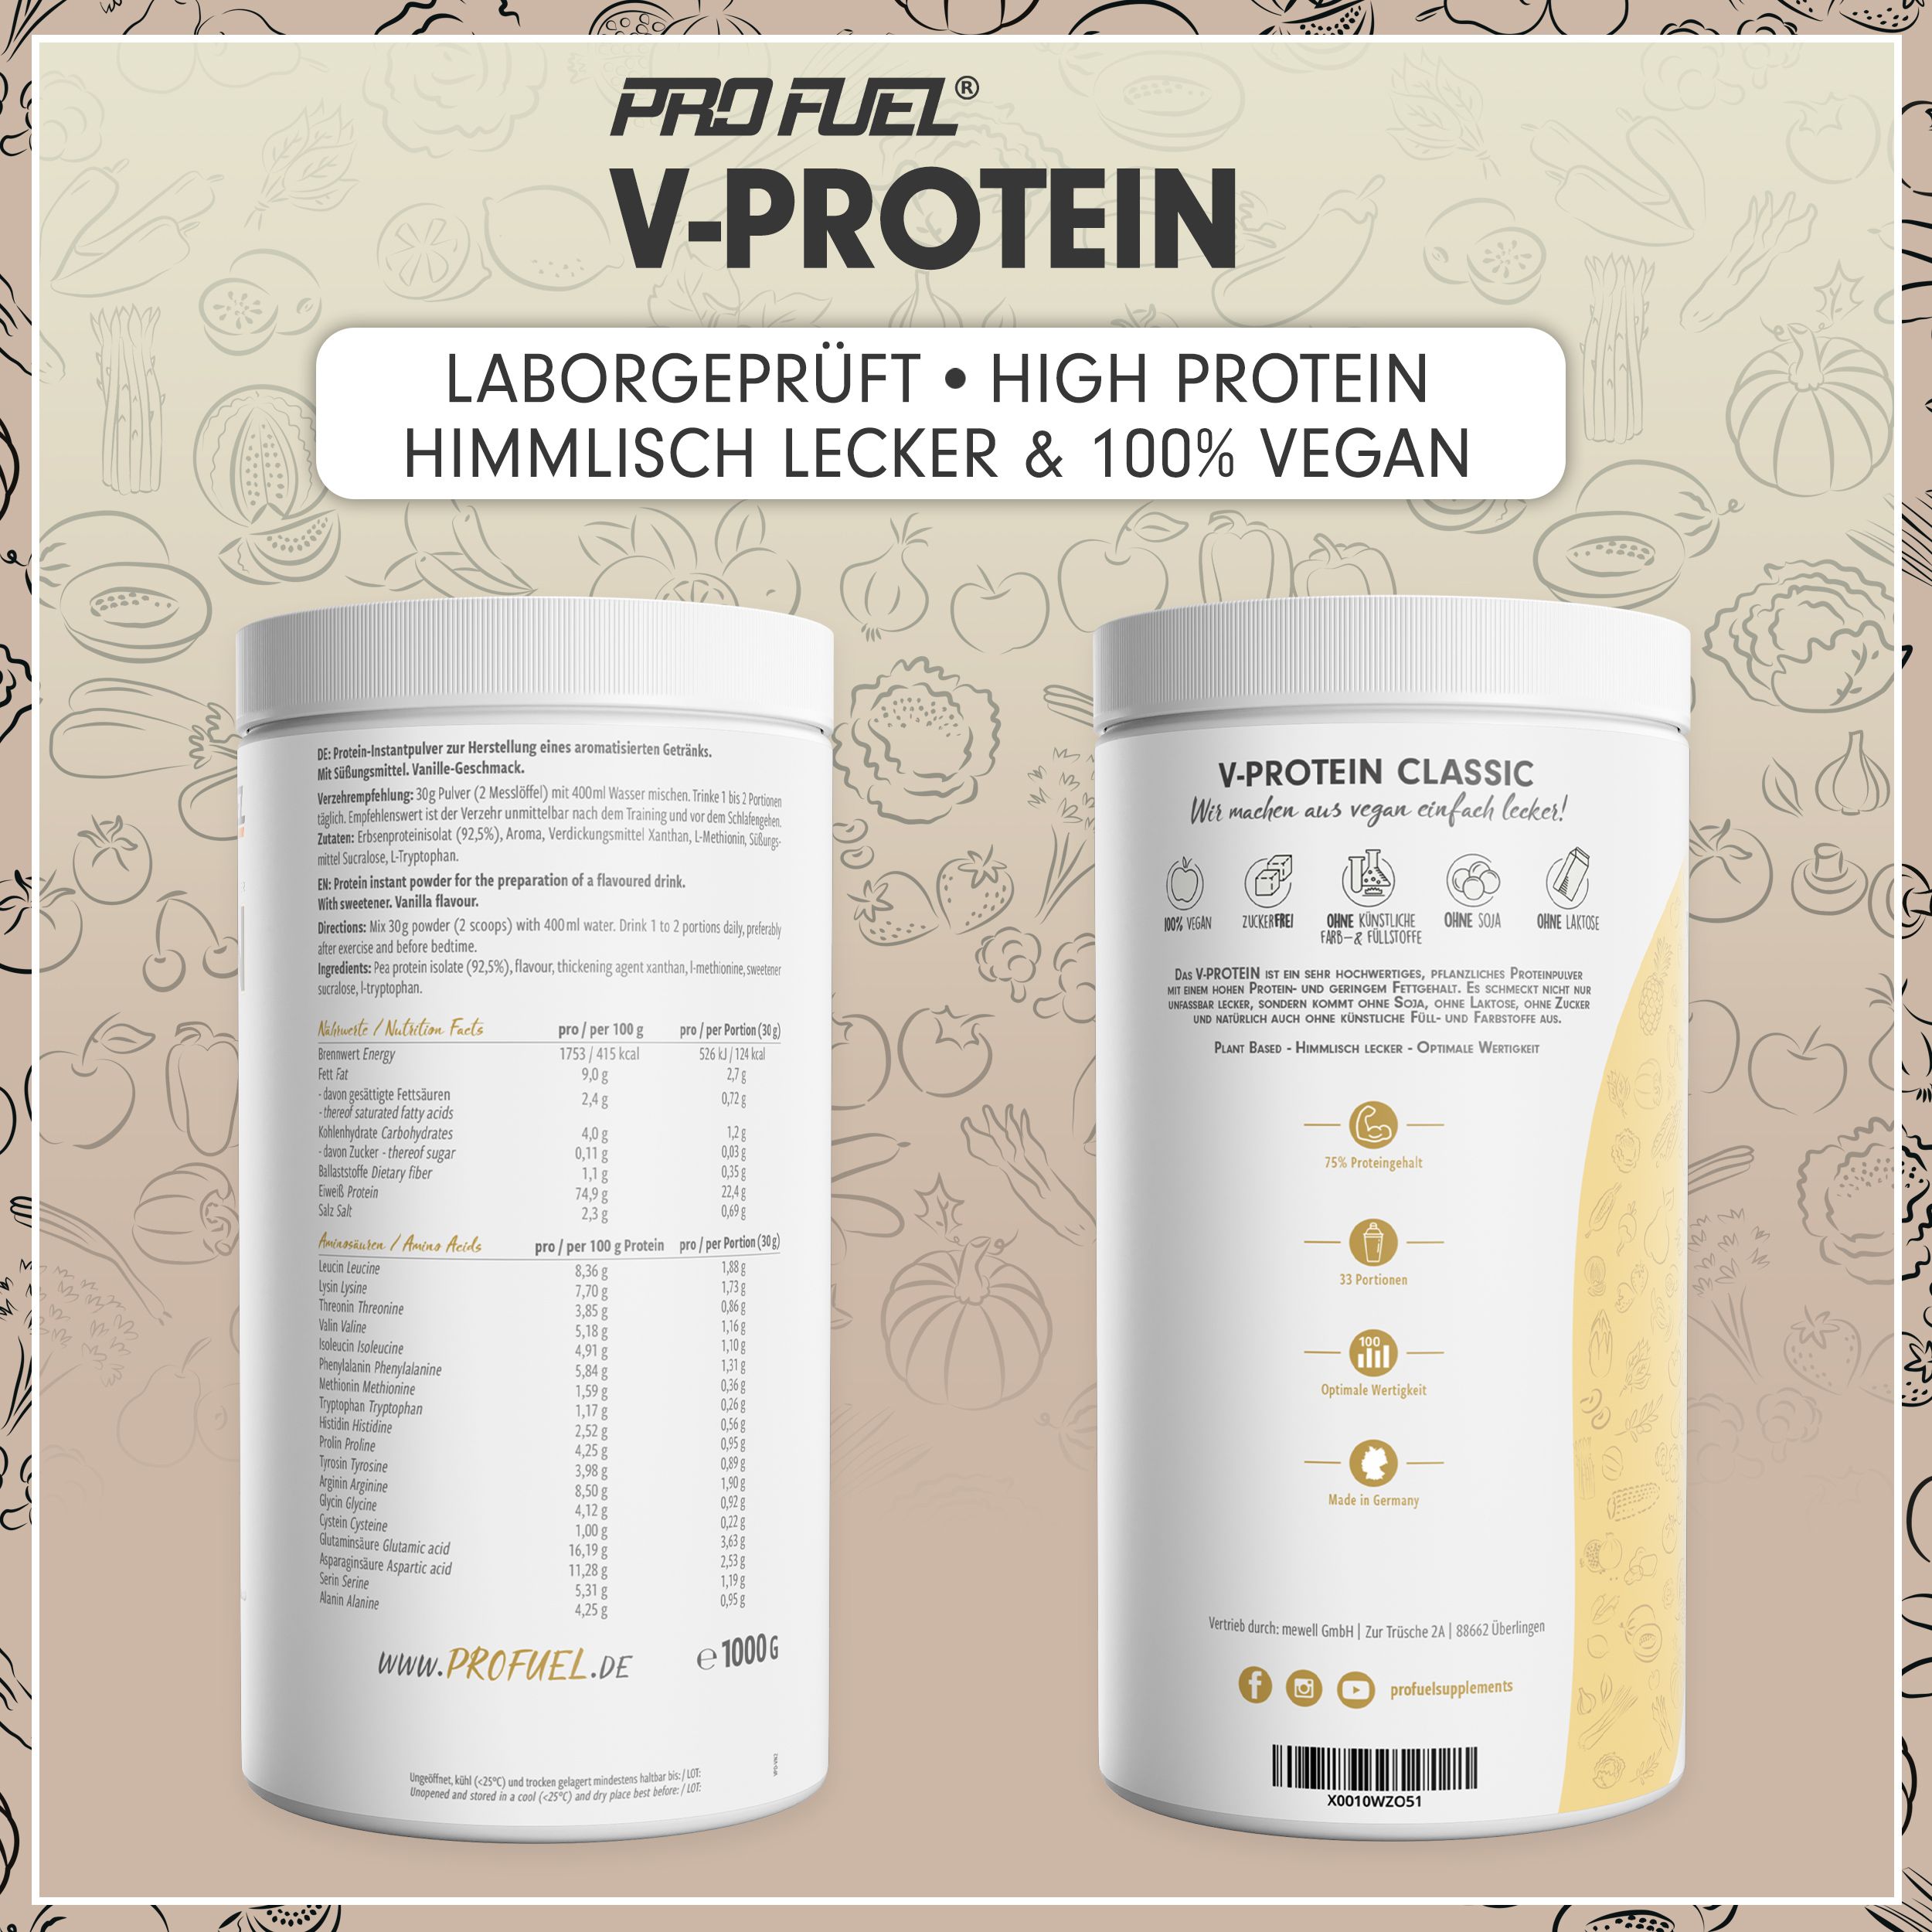 ProFuel - V-PROTEIN Classic - Vanille - veganes Proteinpulver mit 75% Protein